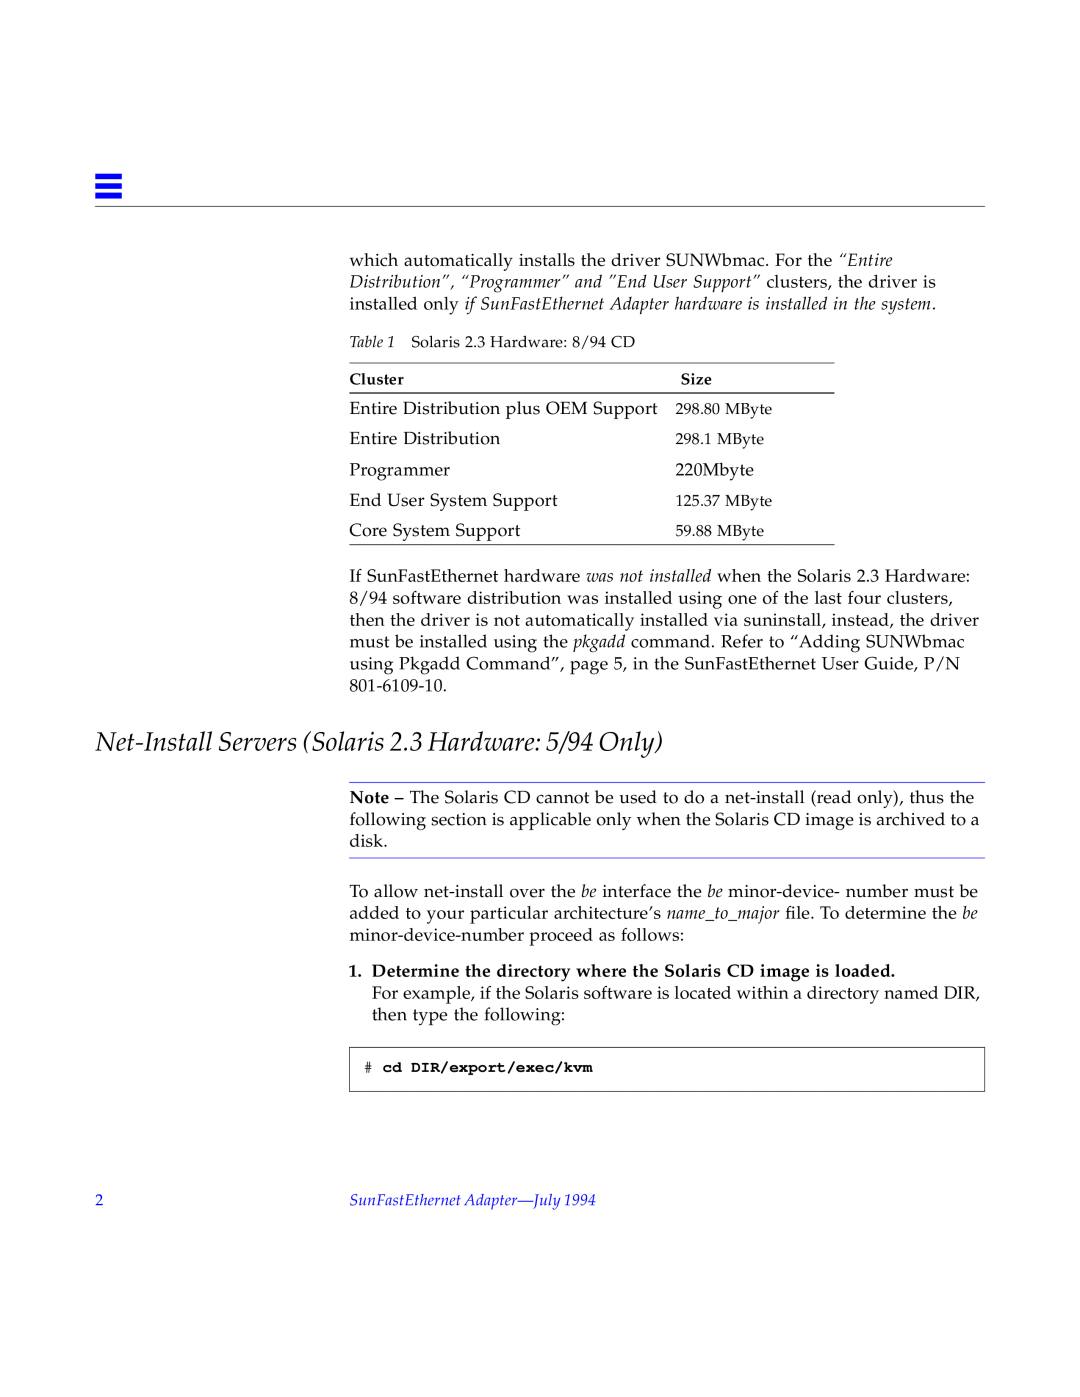 Sun Microsystems 802-1304-10 manual Net-Install Servers Solaris 2.3 Hardware 5/94 Only 